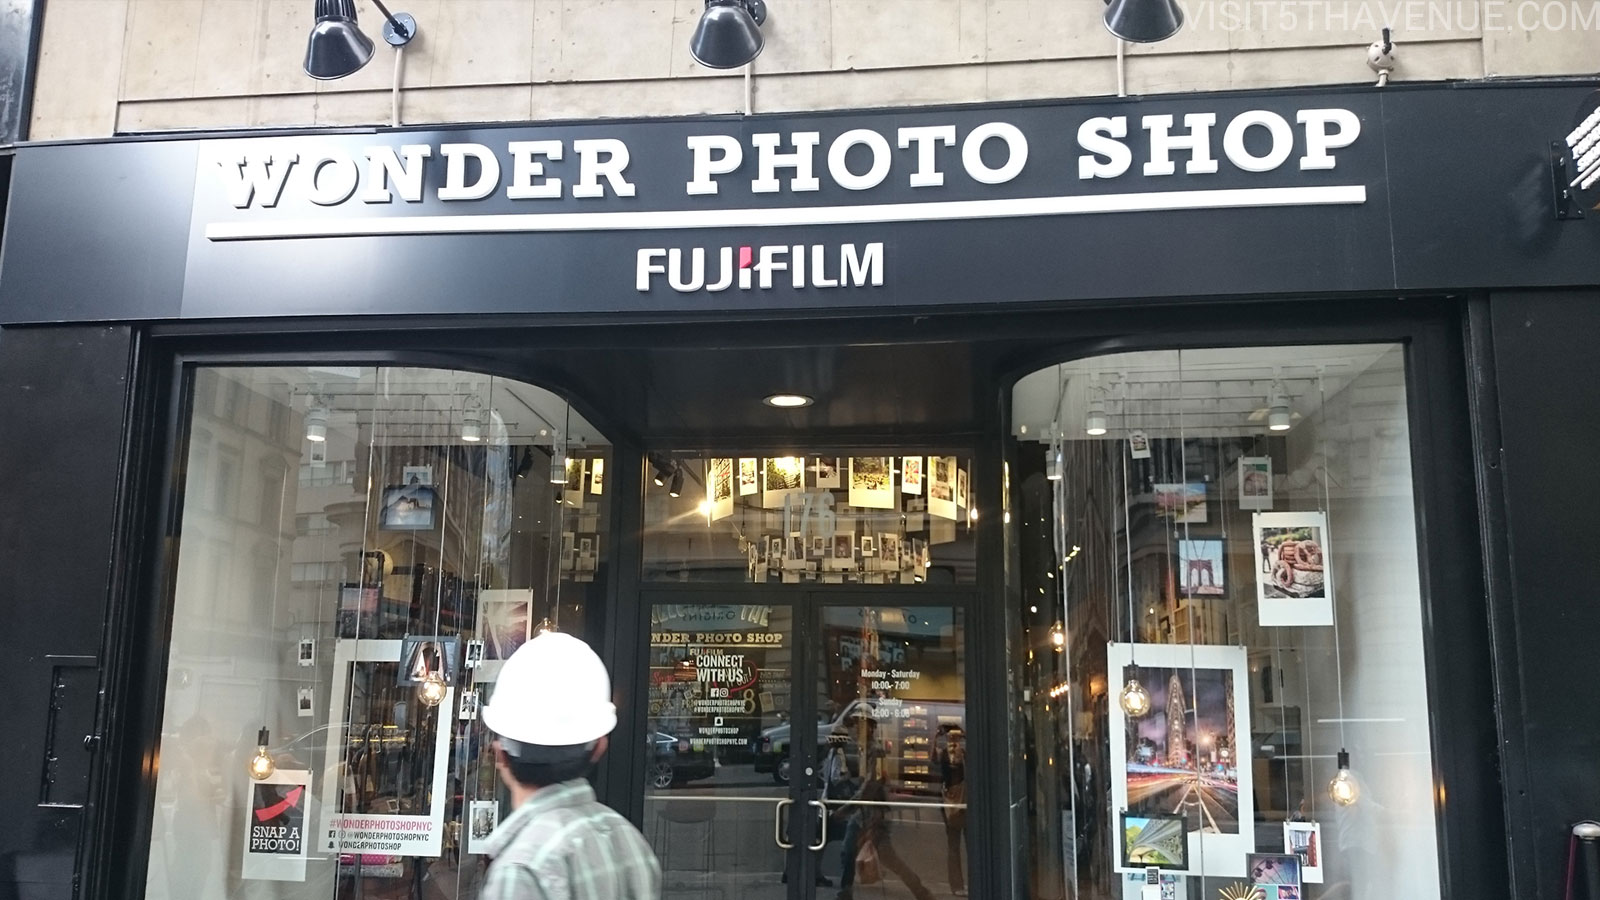 Fujifilm Wonder Photo Shop 176 5th Ave.